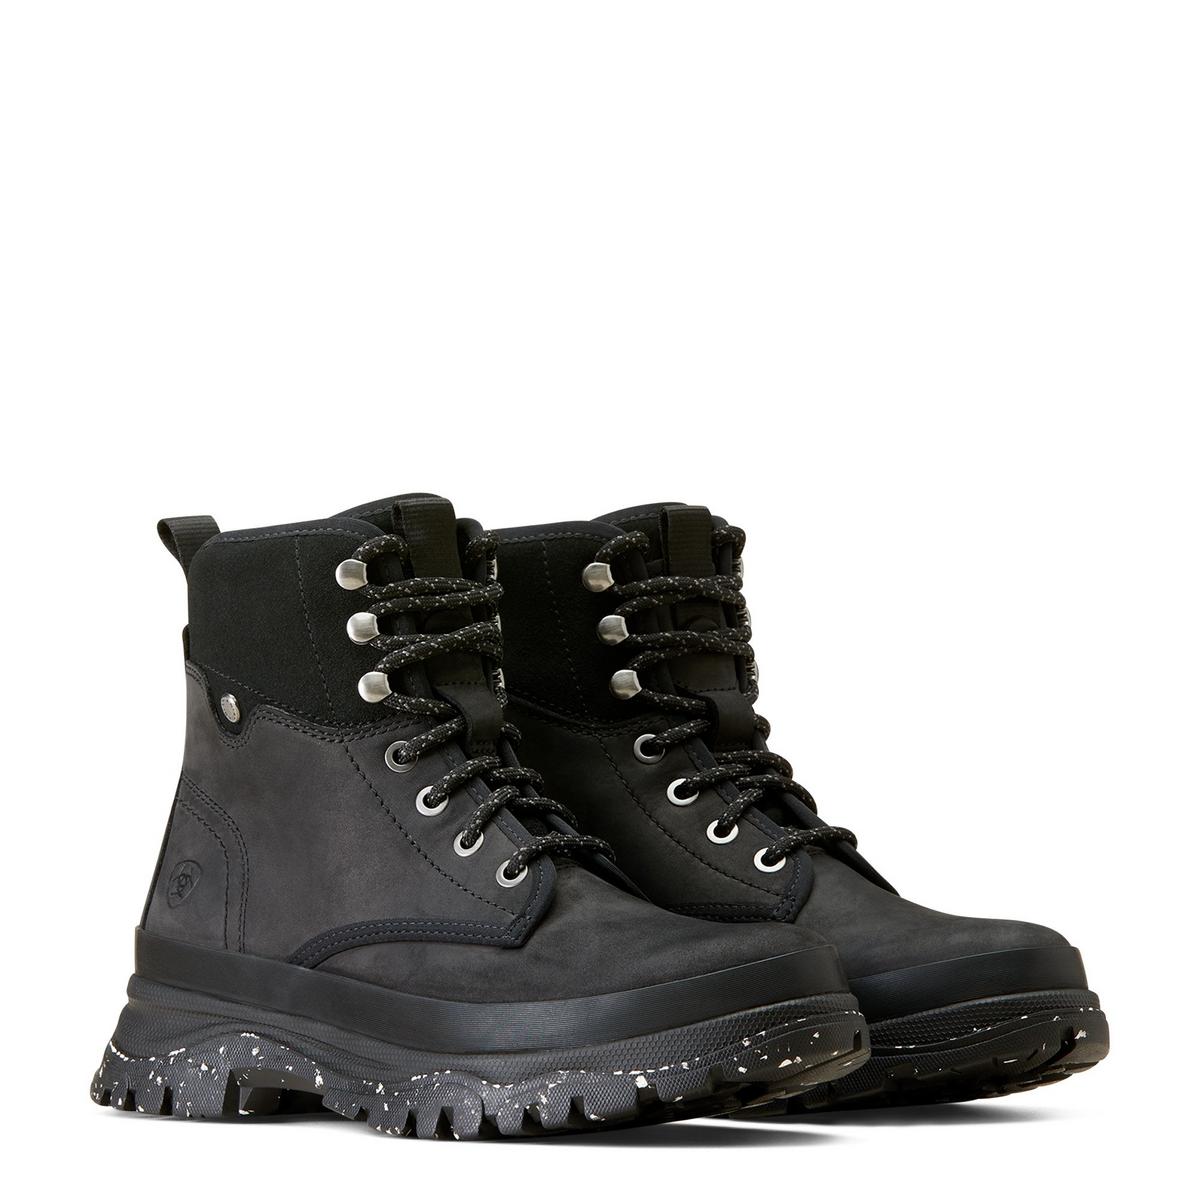 Ariat Women's Moresby Waterproof Boots - Black